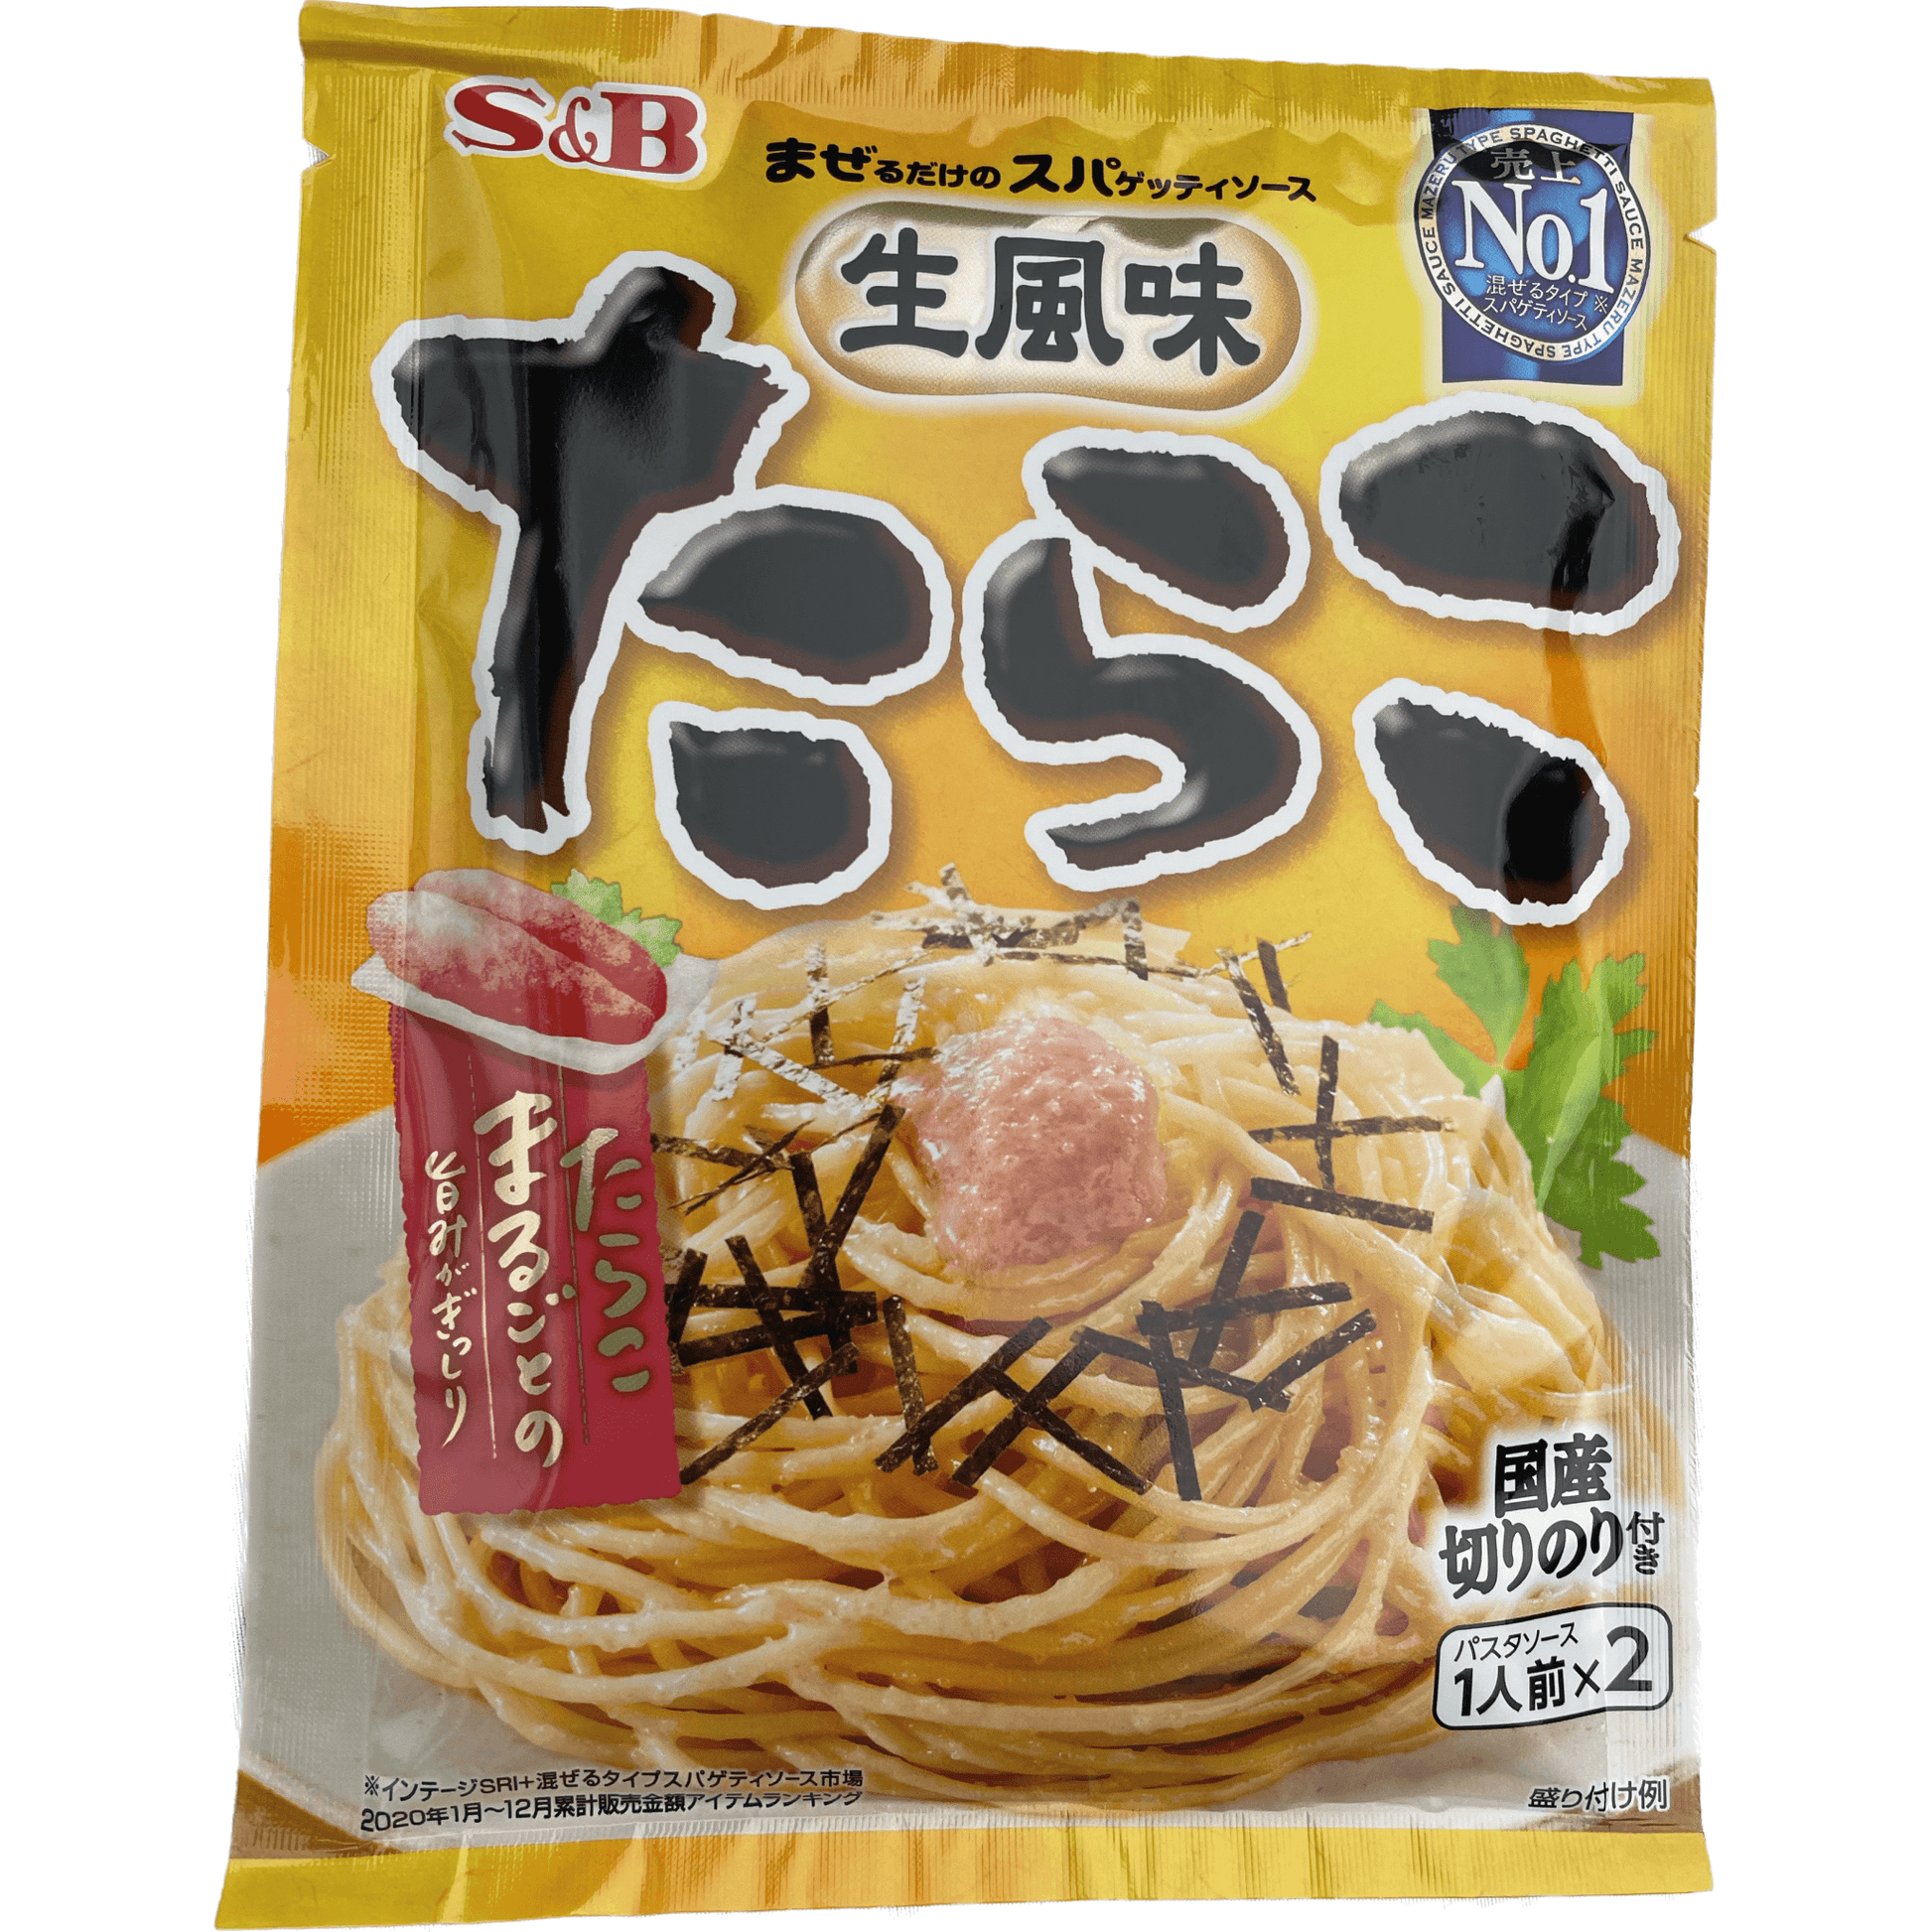 S&B Fresh Flavored Cod Roe Pasta Sauce Ｓ＆Ｂ　生風味たらこ　パスタソース - RiceWineShop